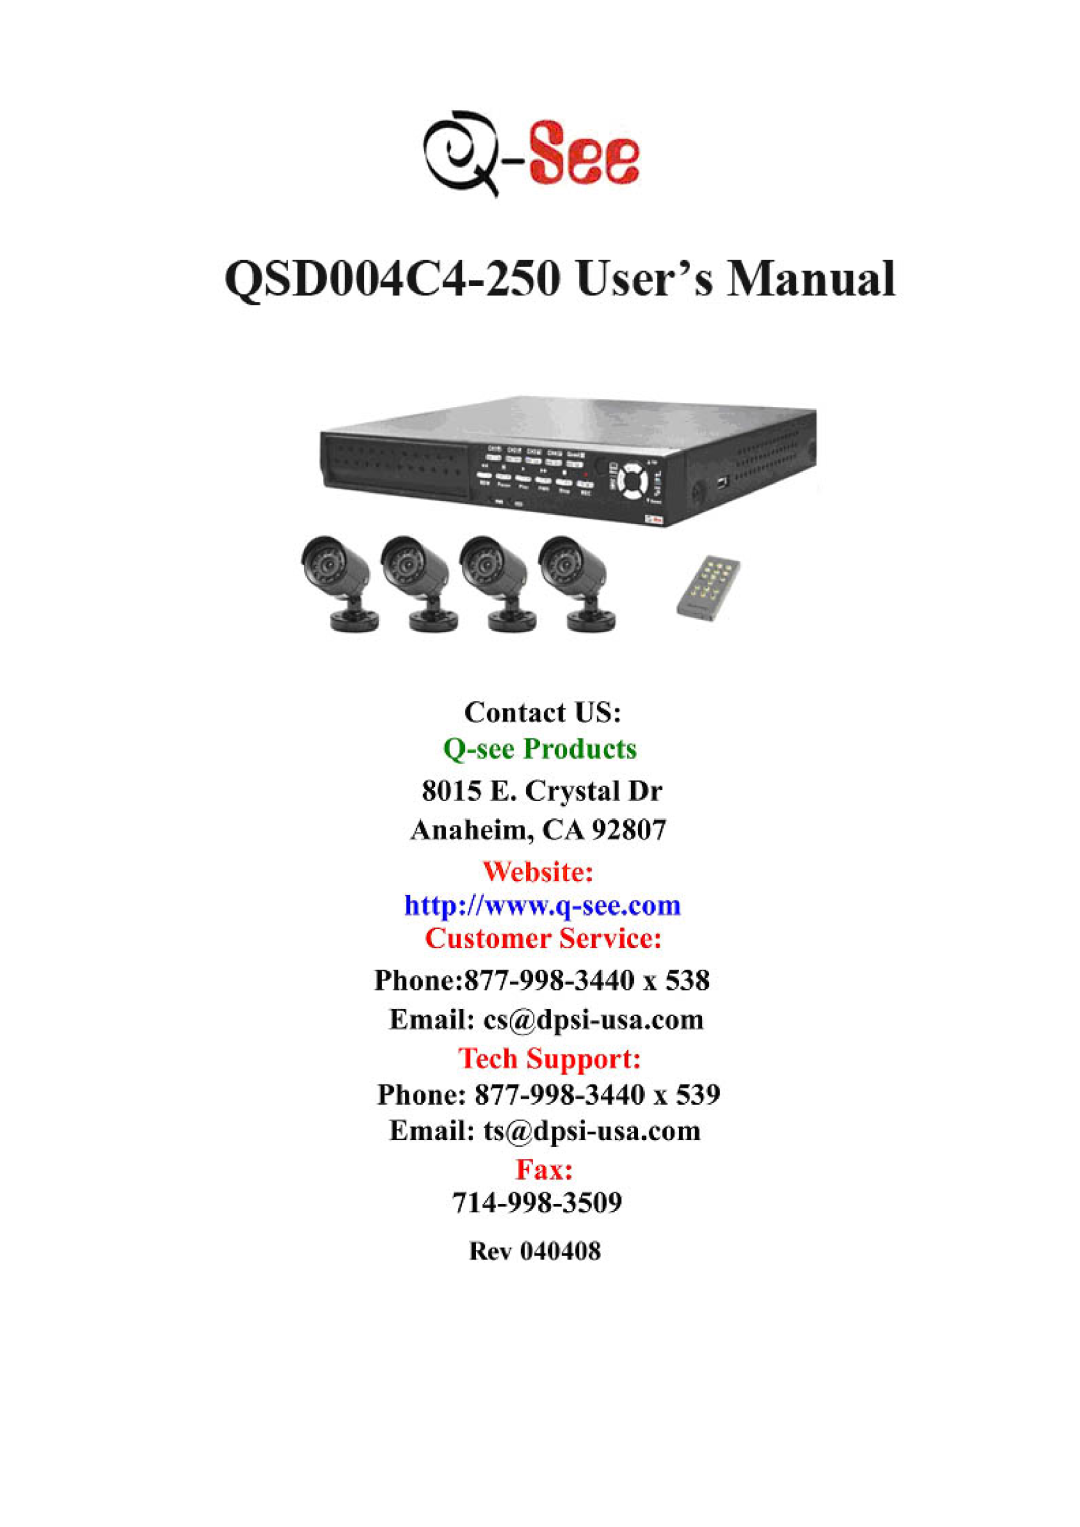 Q-See QSD004C4-250 manual 